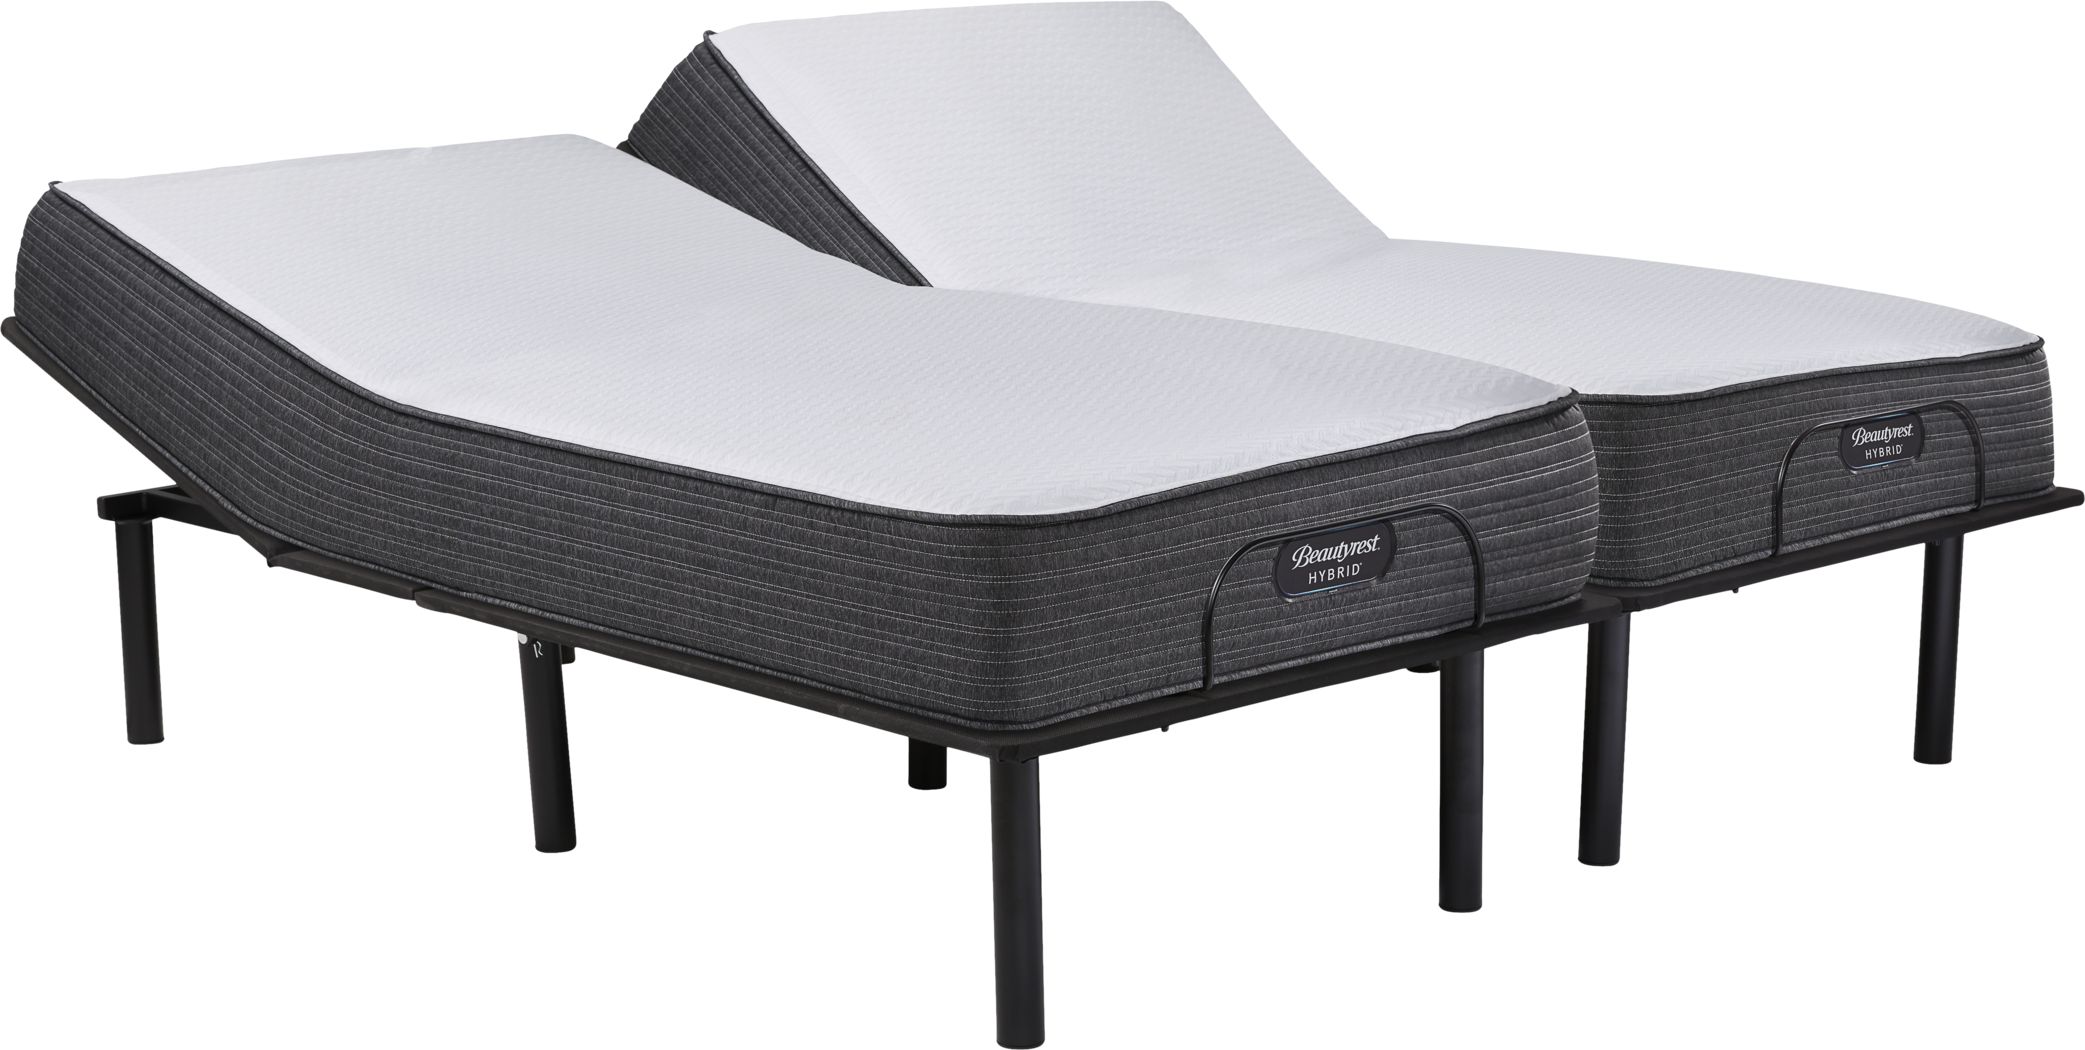 beautyrest hybrid geneva lake king mattress